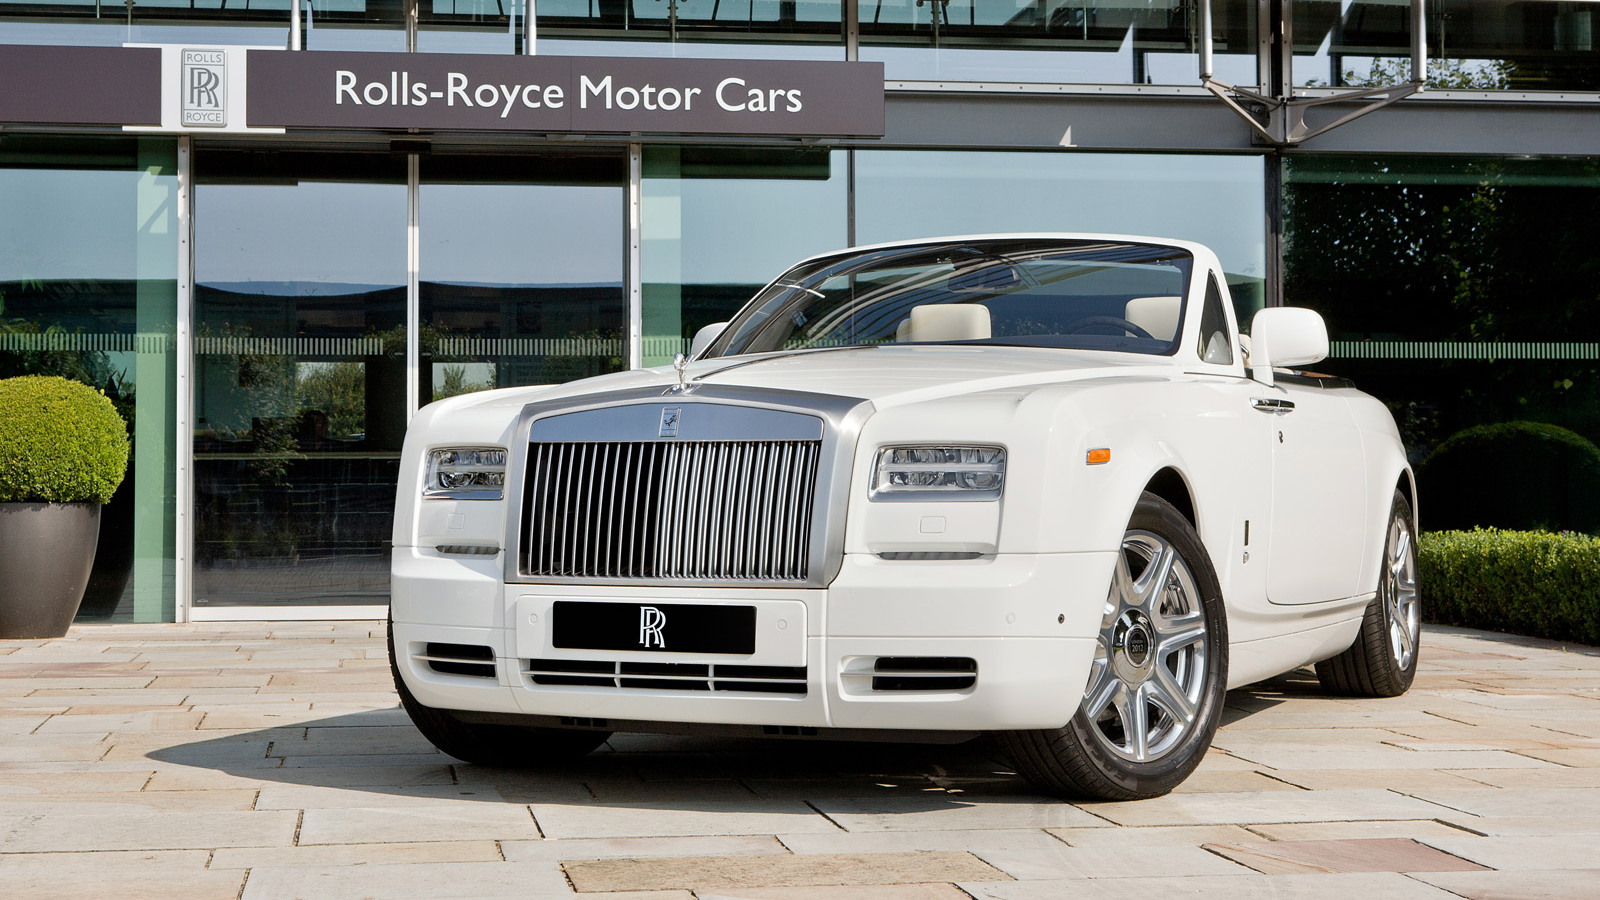 Rolls-Royce Phantom Drophead Coupe Series II 2012 London Olympics special edition